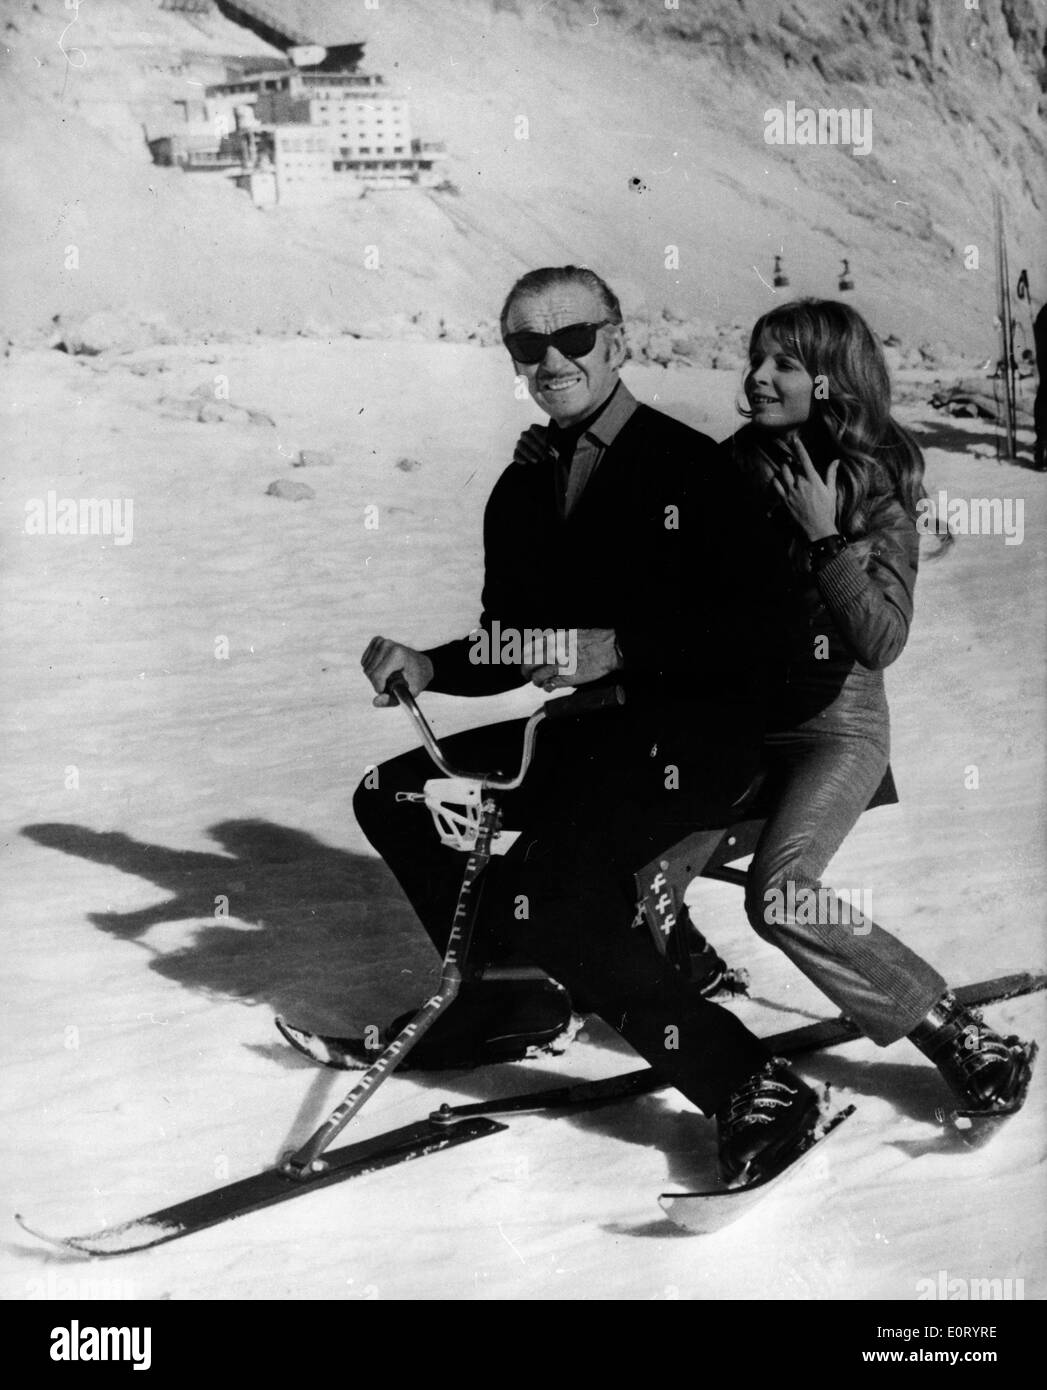 David Niven filming movie scenes while skiing Stock Photo